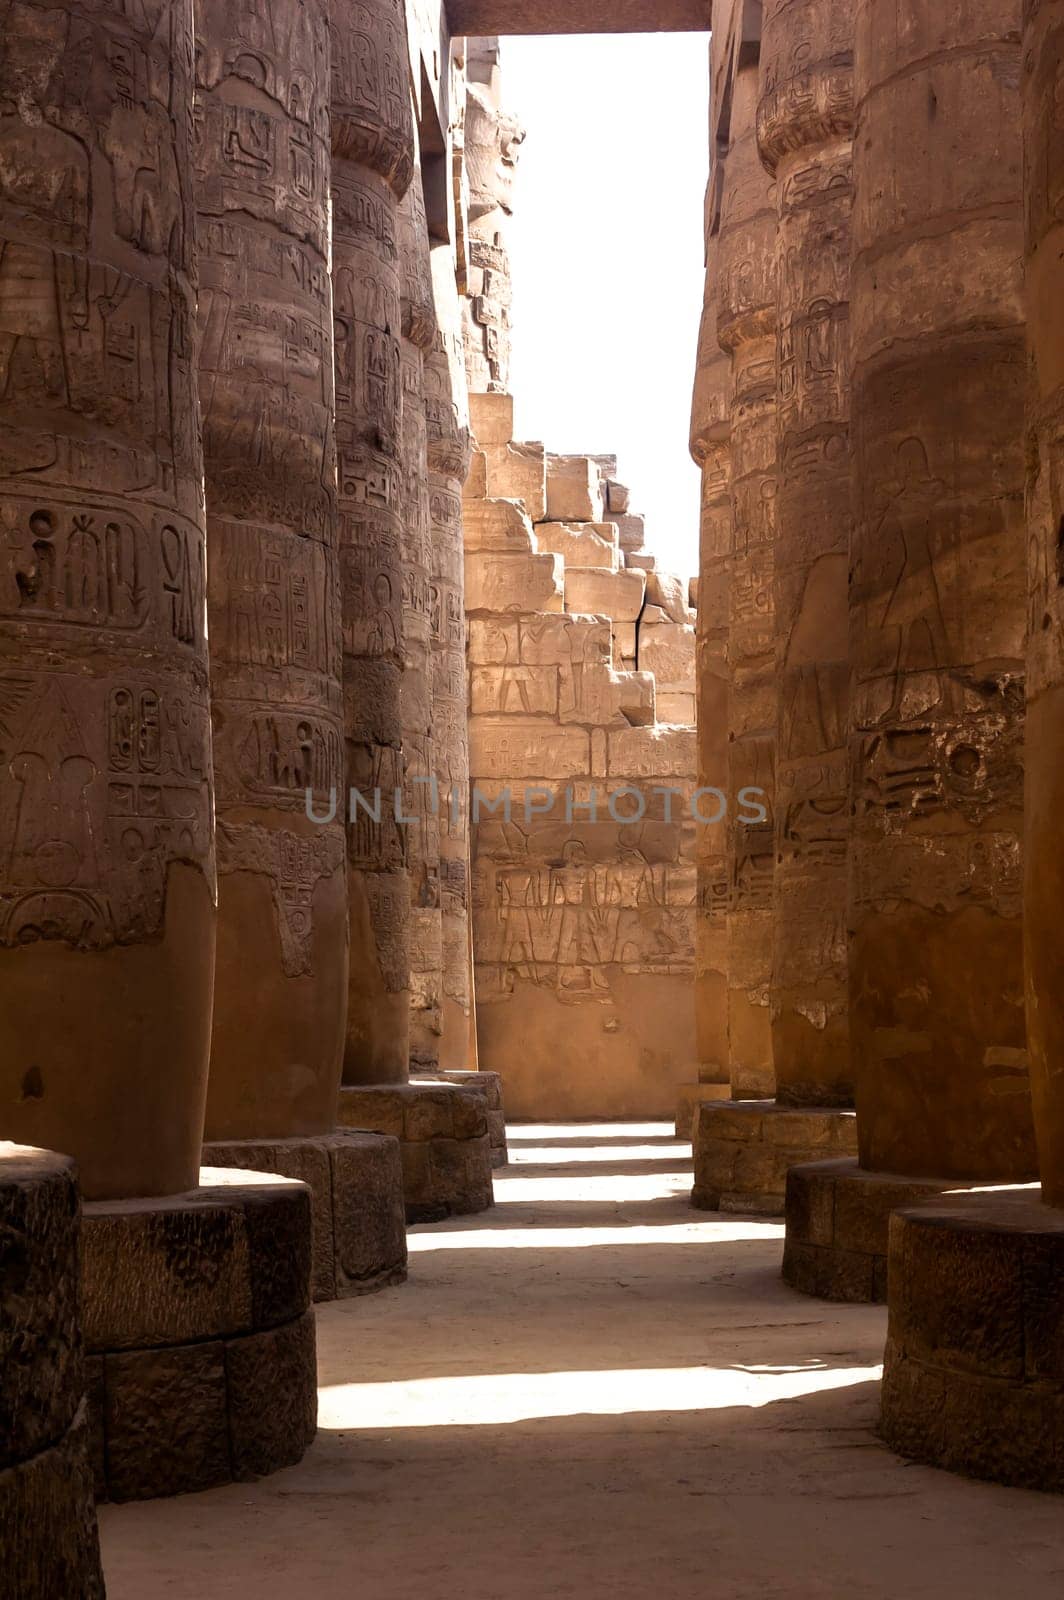 Amon temple in Karnak by Giamplume